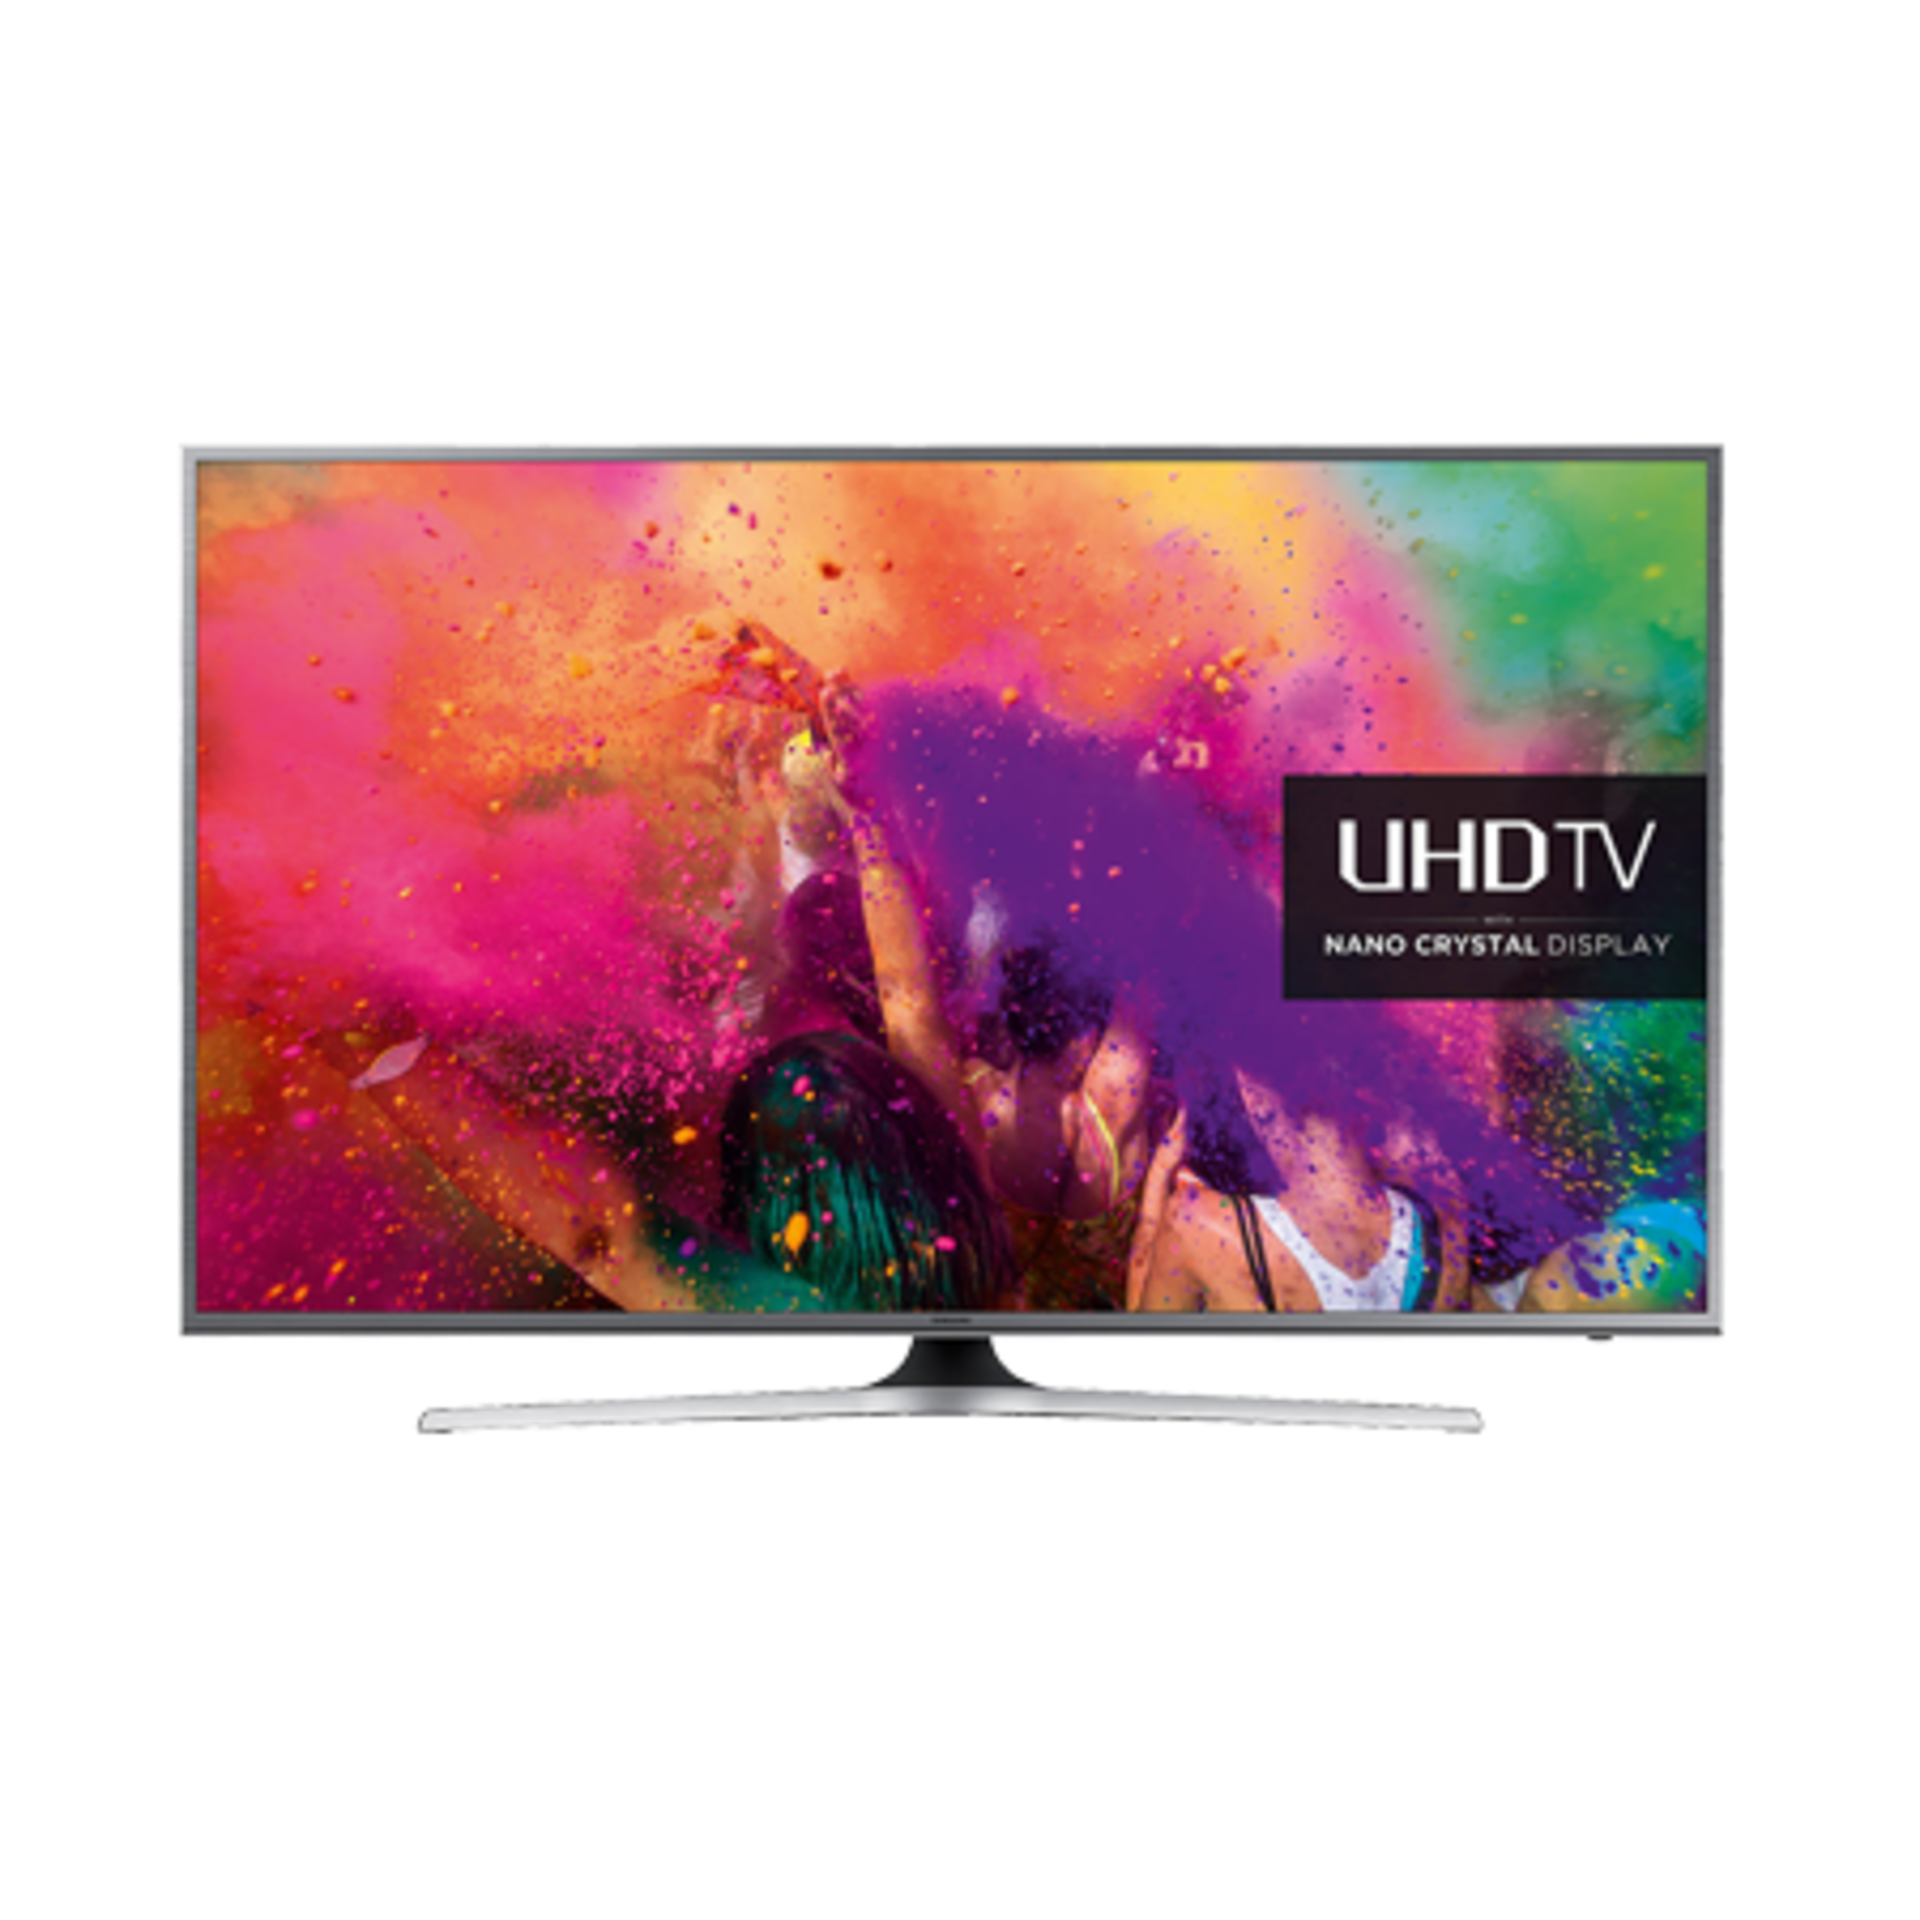 (T48) SAMSUNG UE60JU6800 60 Inch Series 6 Ultra HD 4K Nano Crystal Smart LED TV. RRP £1,399. Product